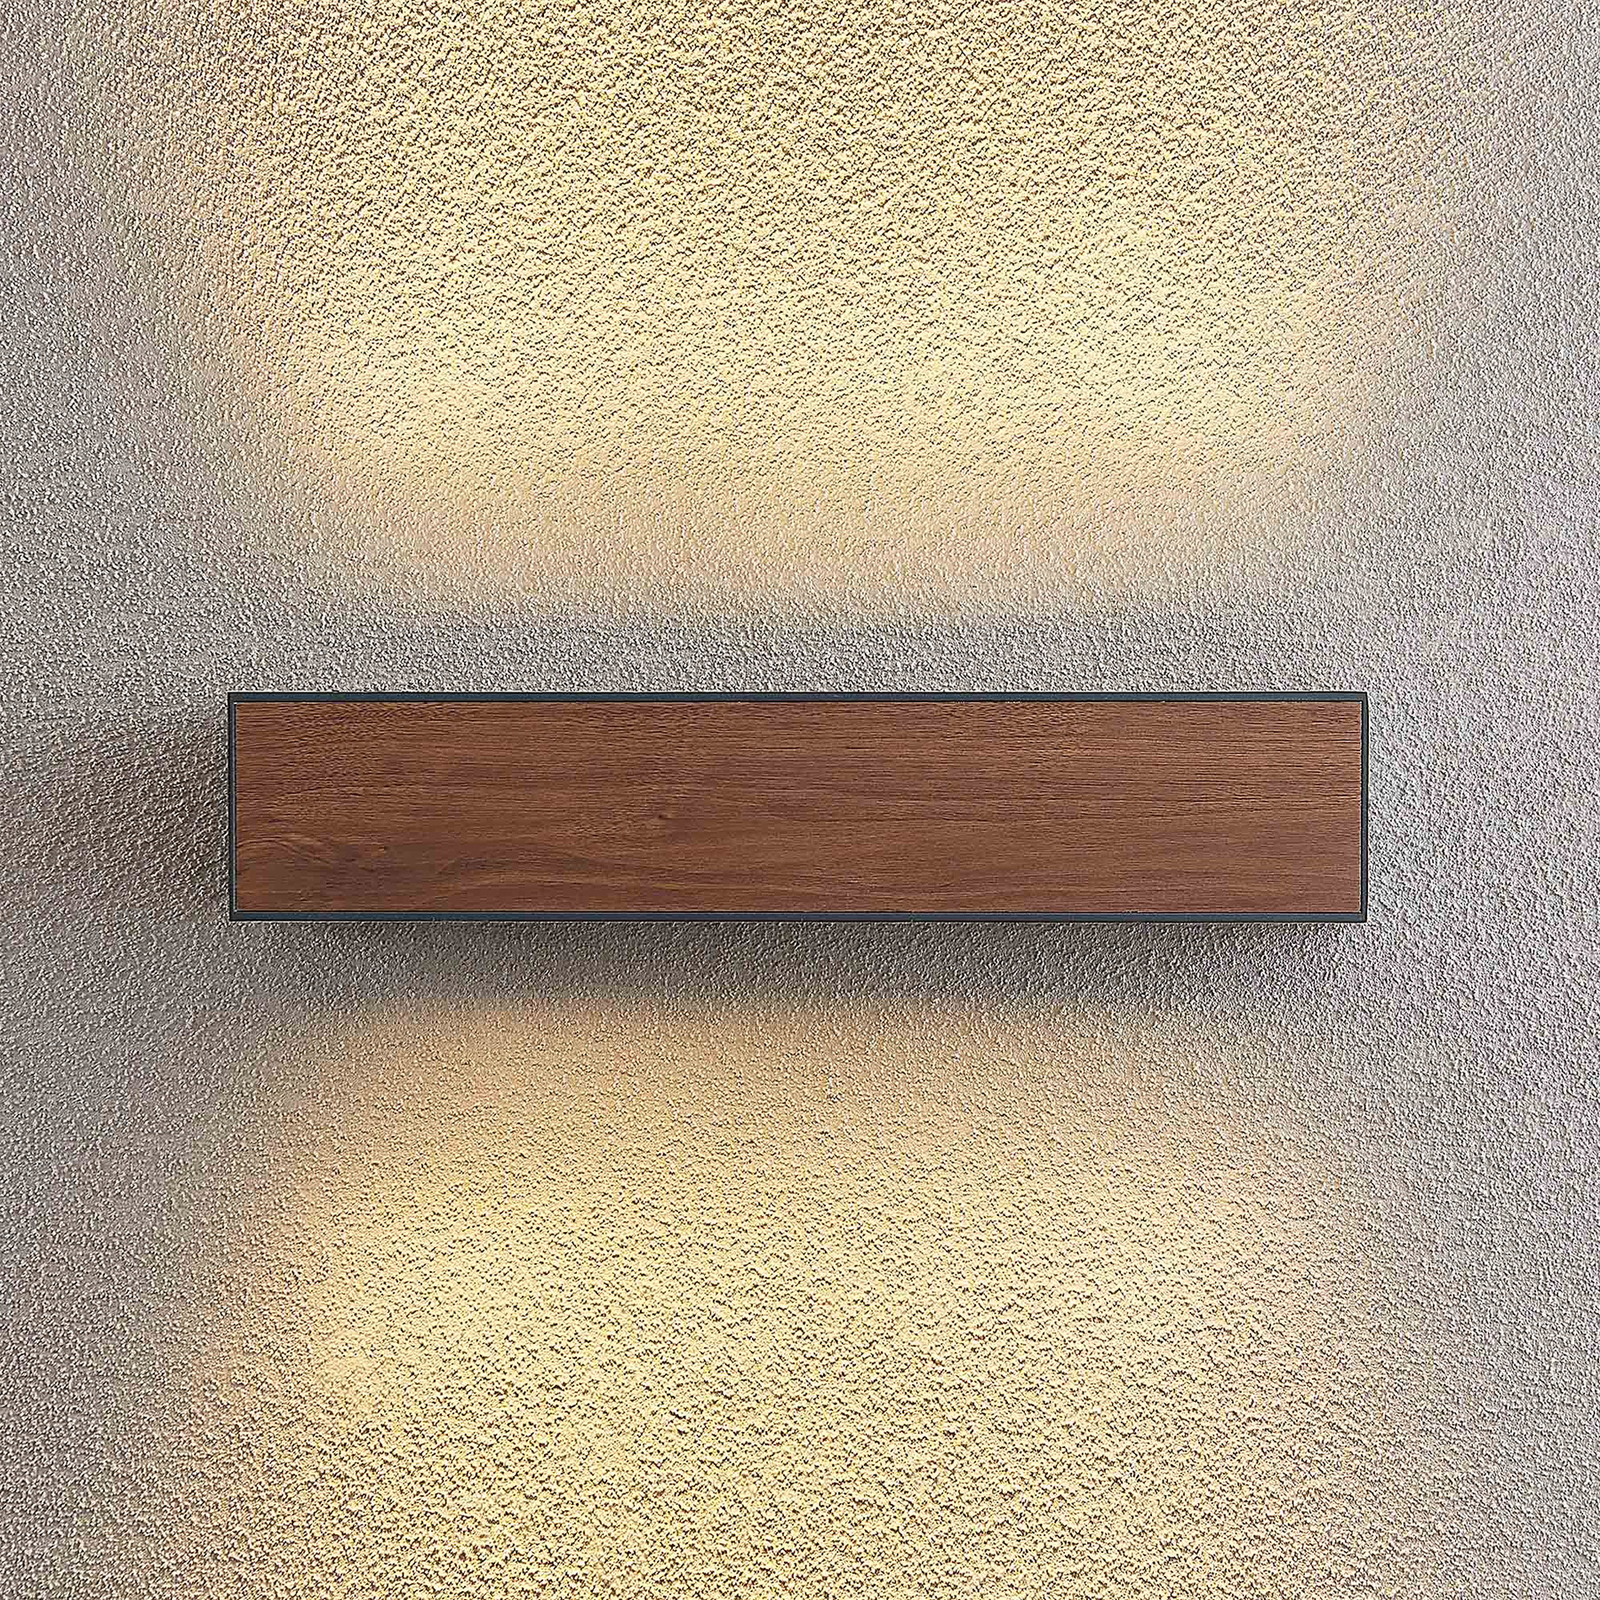 Arcchio Miraz LED outdoor wall light, wood look